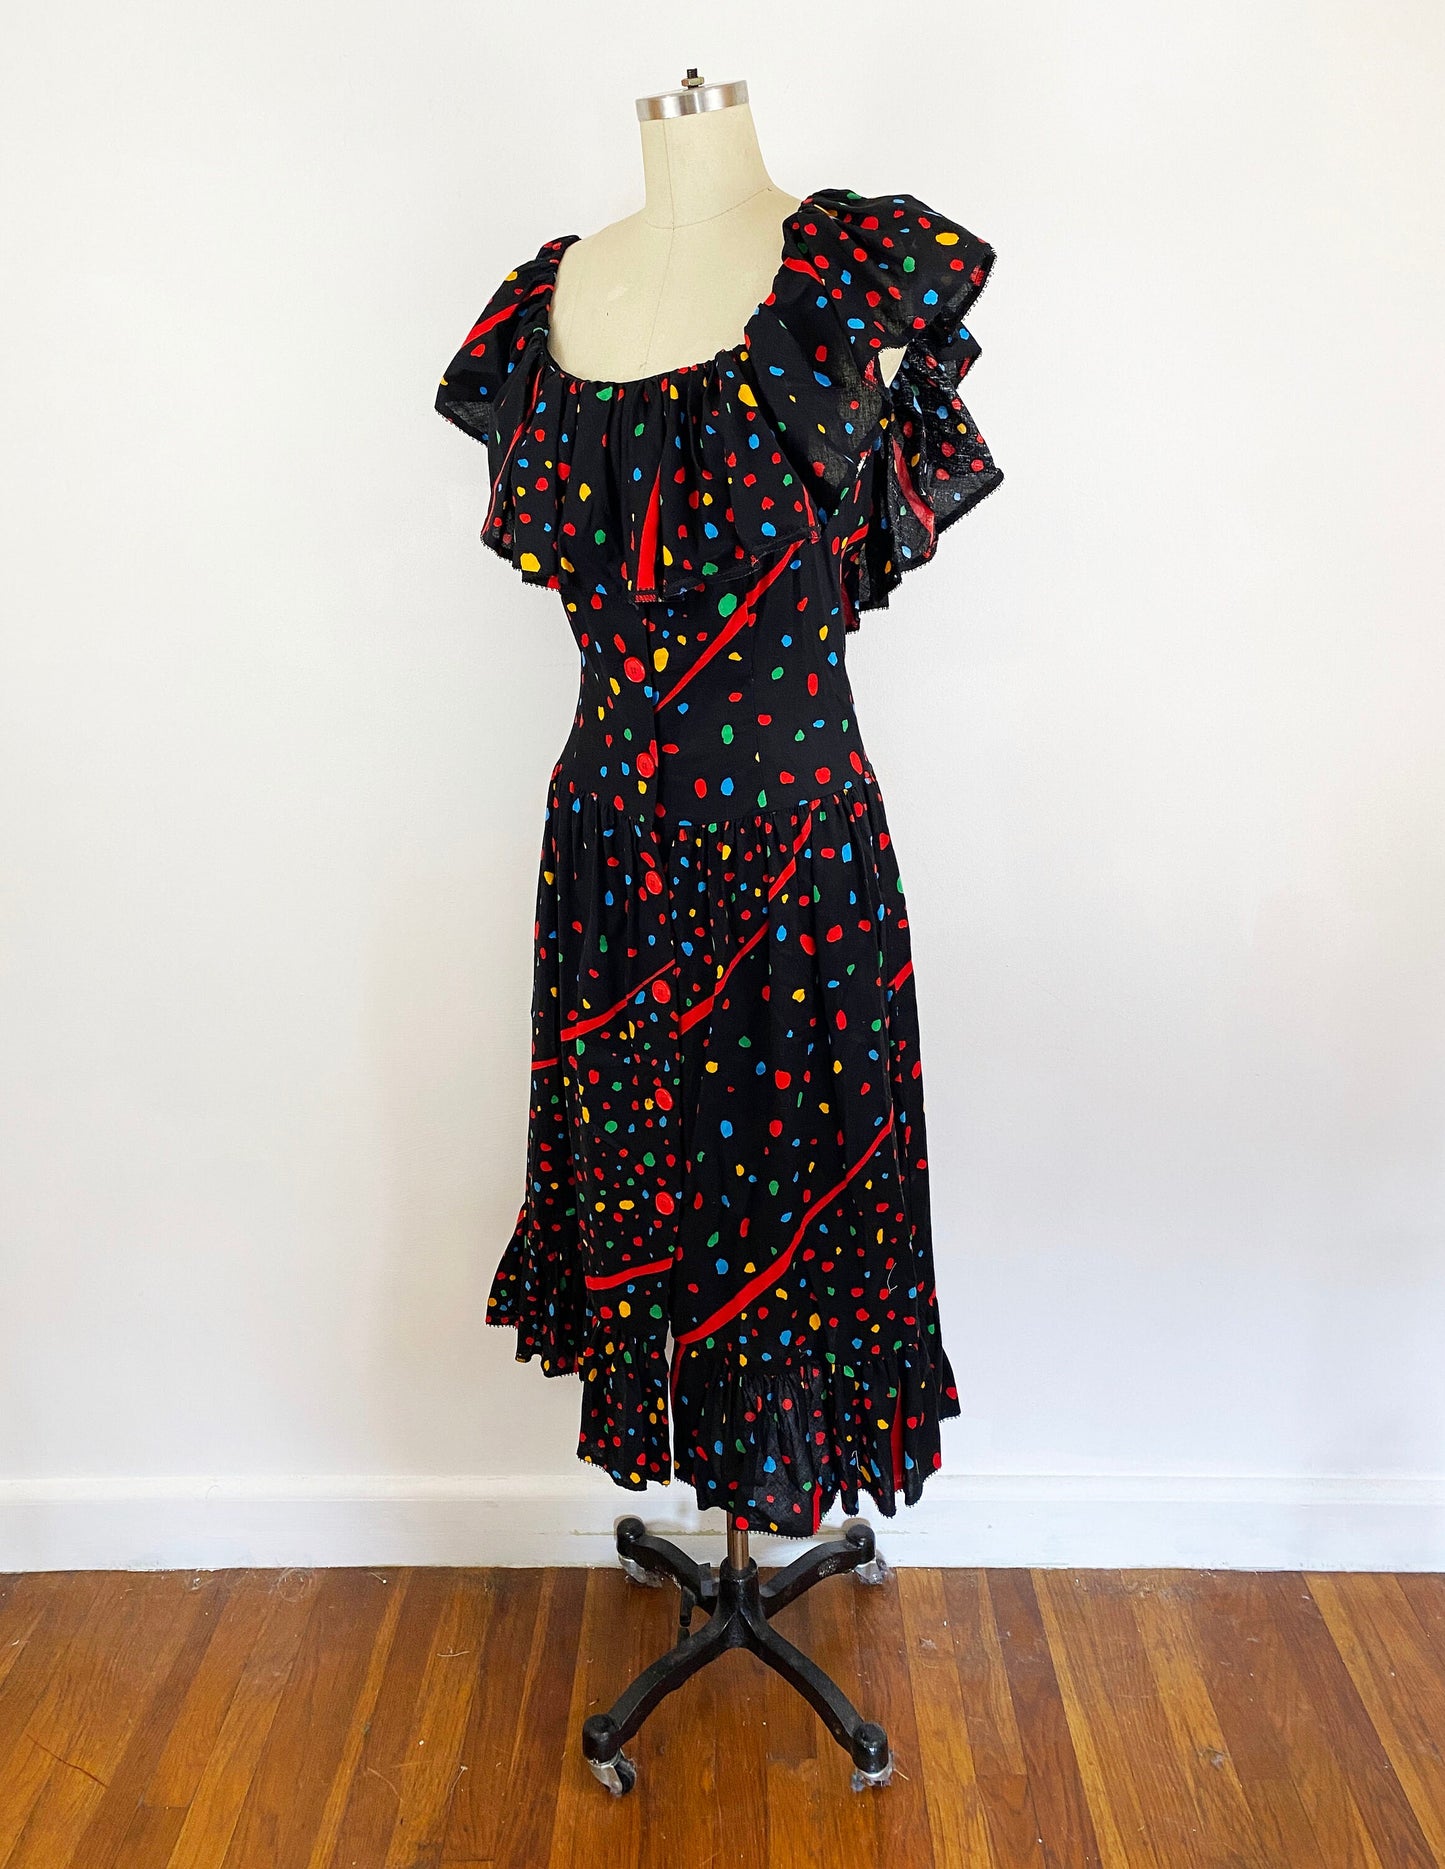 1980s Bill Blass Midi Dress Red Black Polka Dot Striped Cotton Ruffle Collar Sundress 80s Playful Fit Flare Cha Cha Party Vintage / Size Small 6